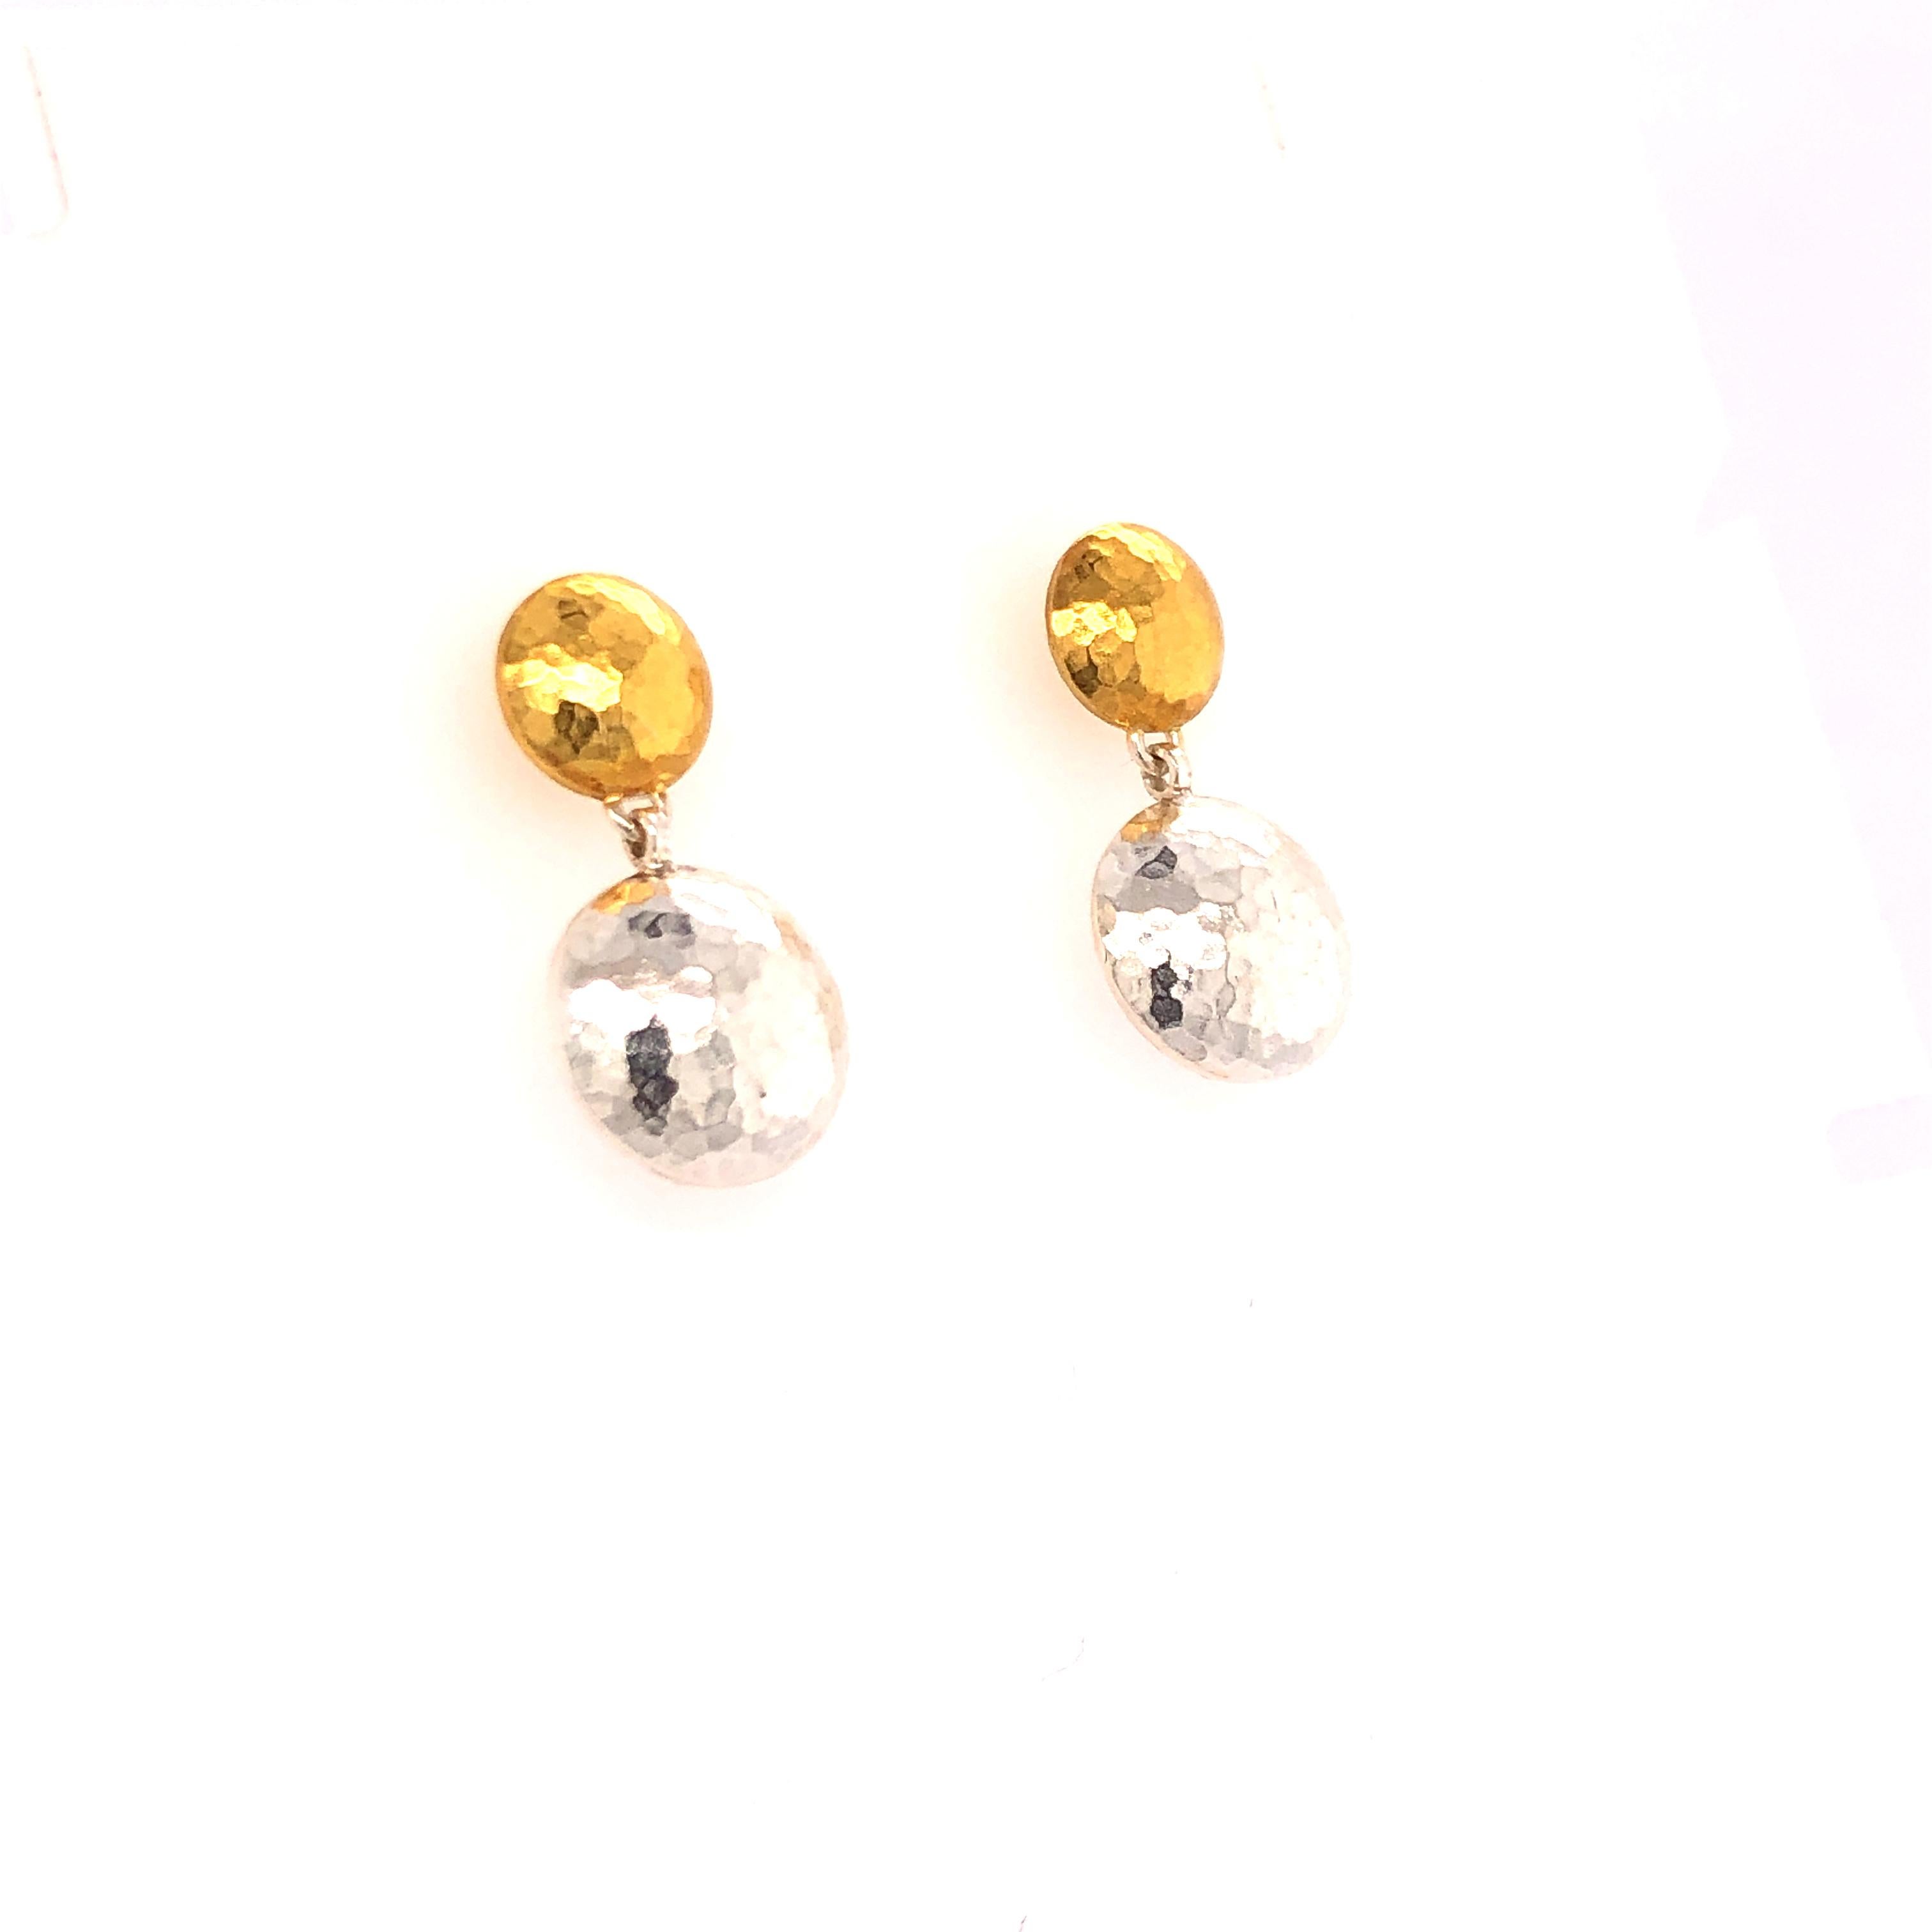 Sterling Silver & 24KY Drop Earrings

Stamped: Gurhan, EA56160